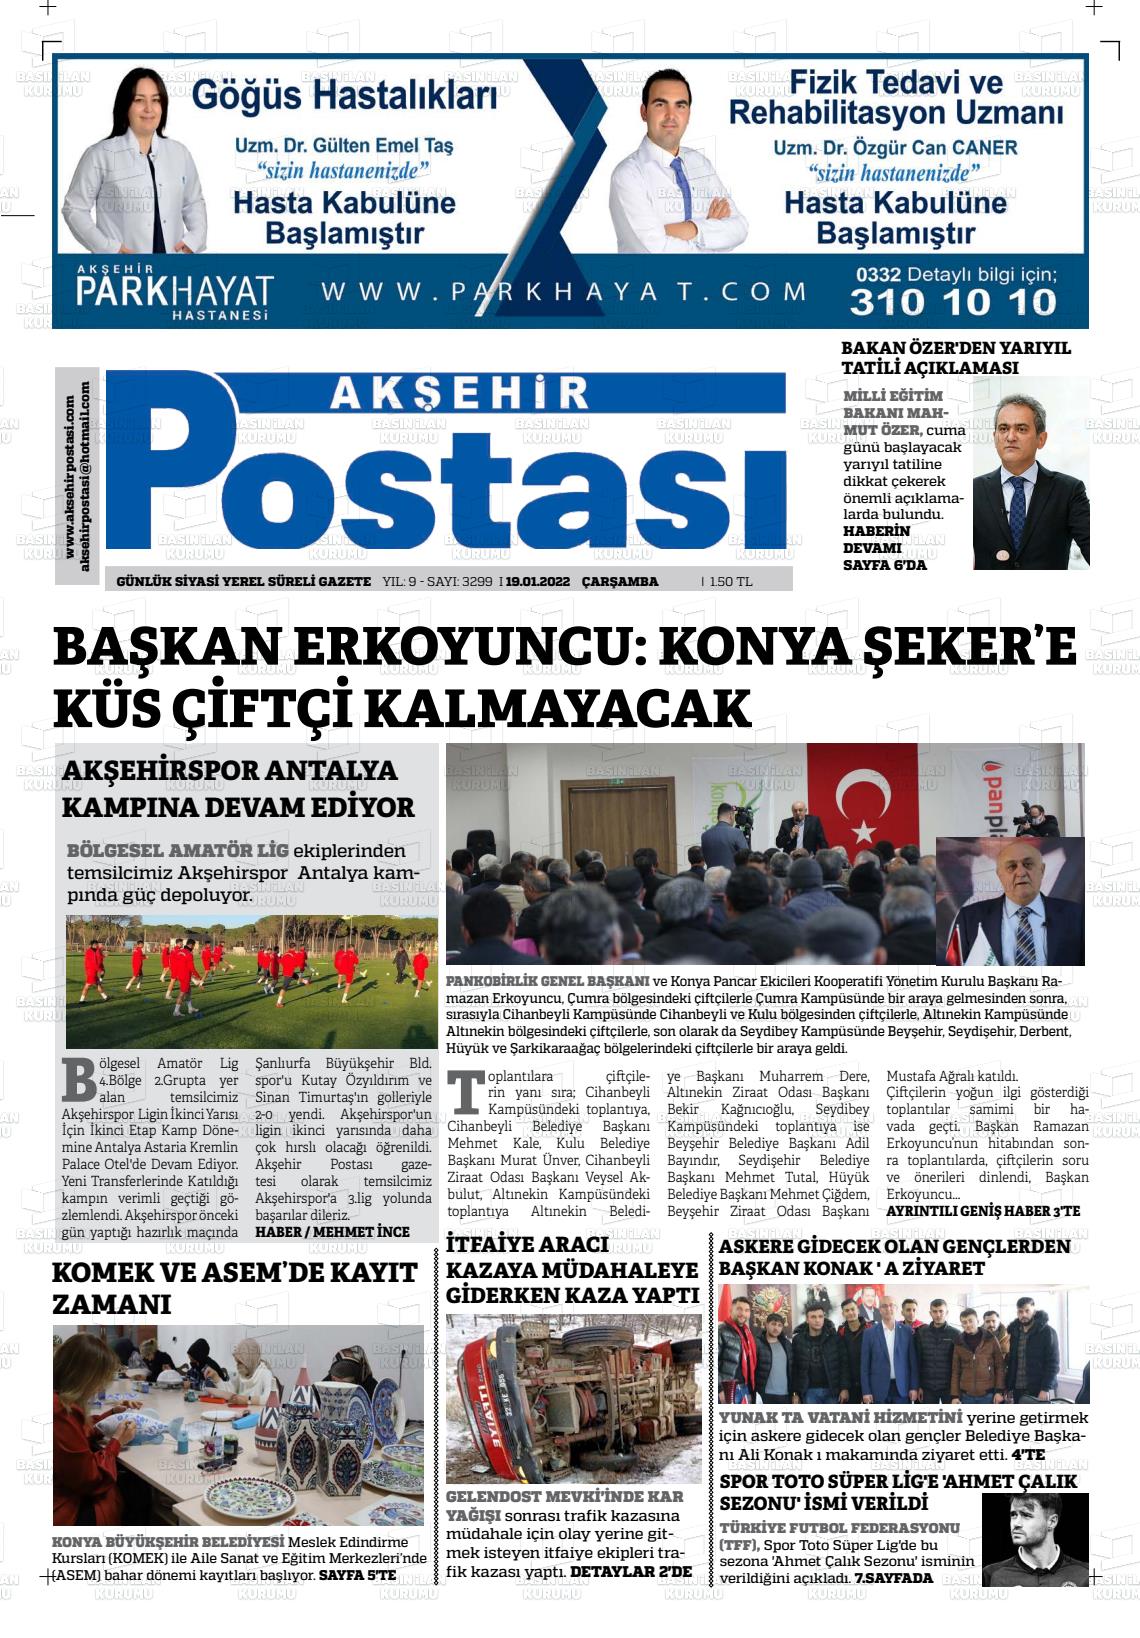 19 Ocak 2022 Akşehir Postasi Gazete Manşeti